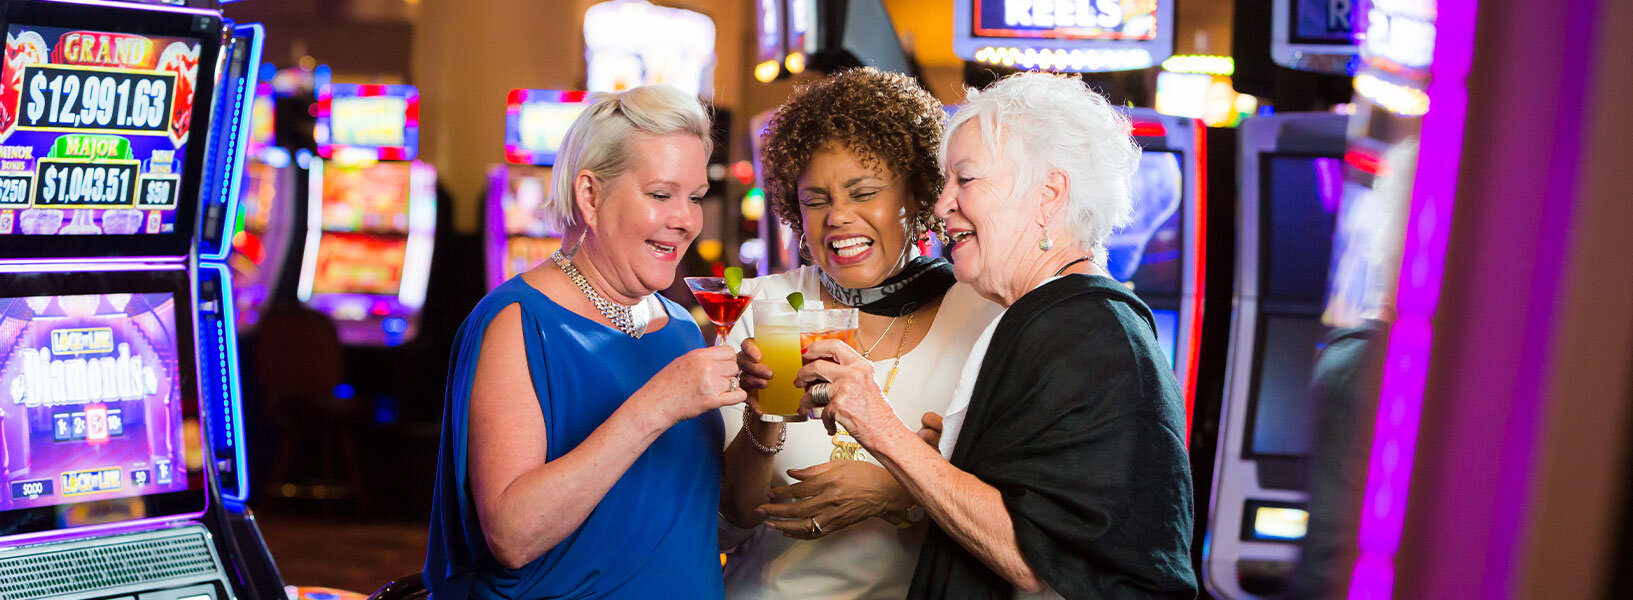 Ladies toasting cocktails at the casino